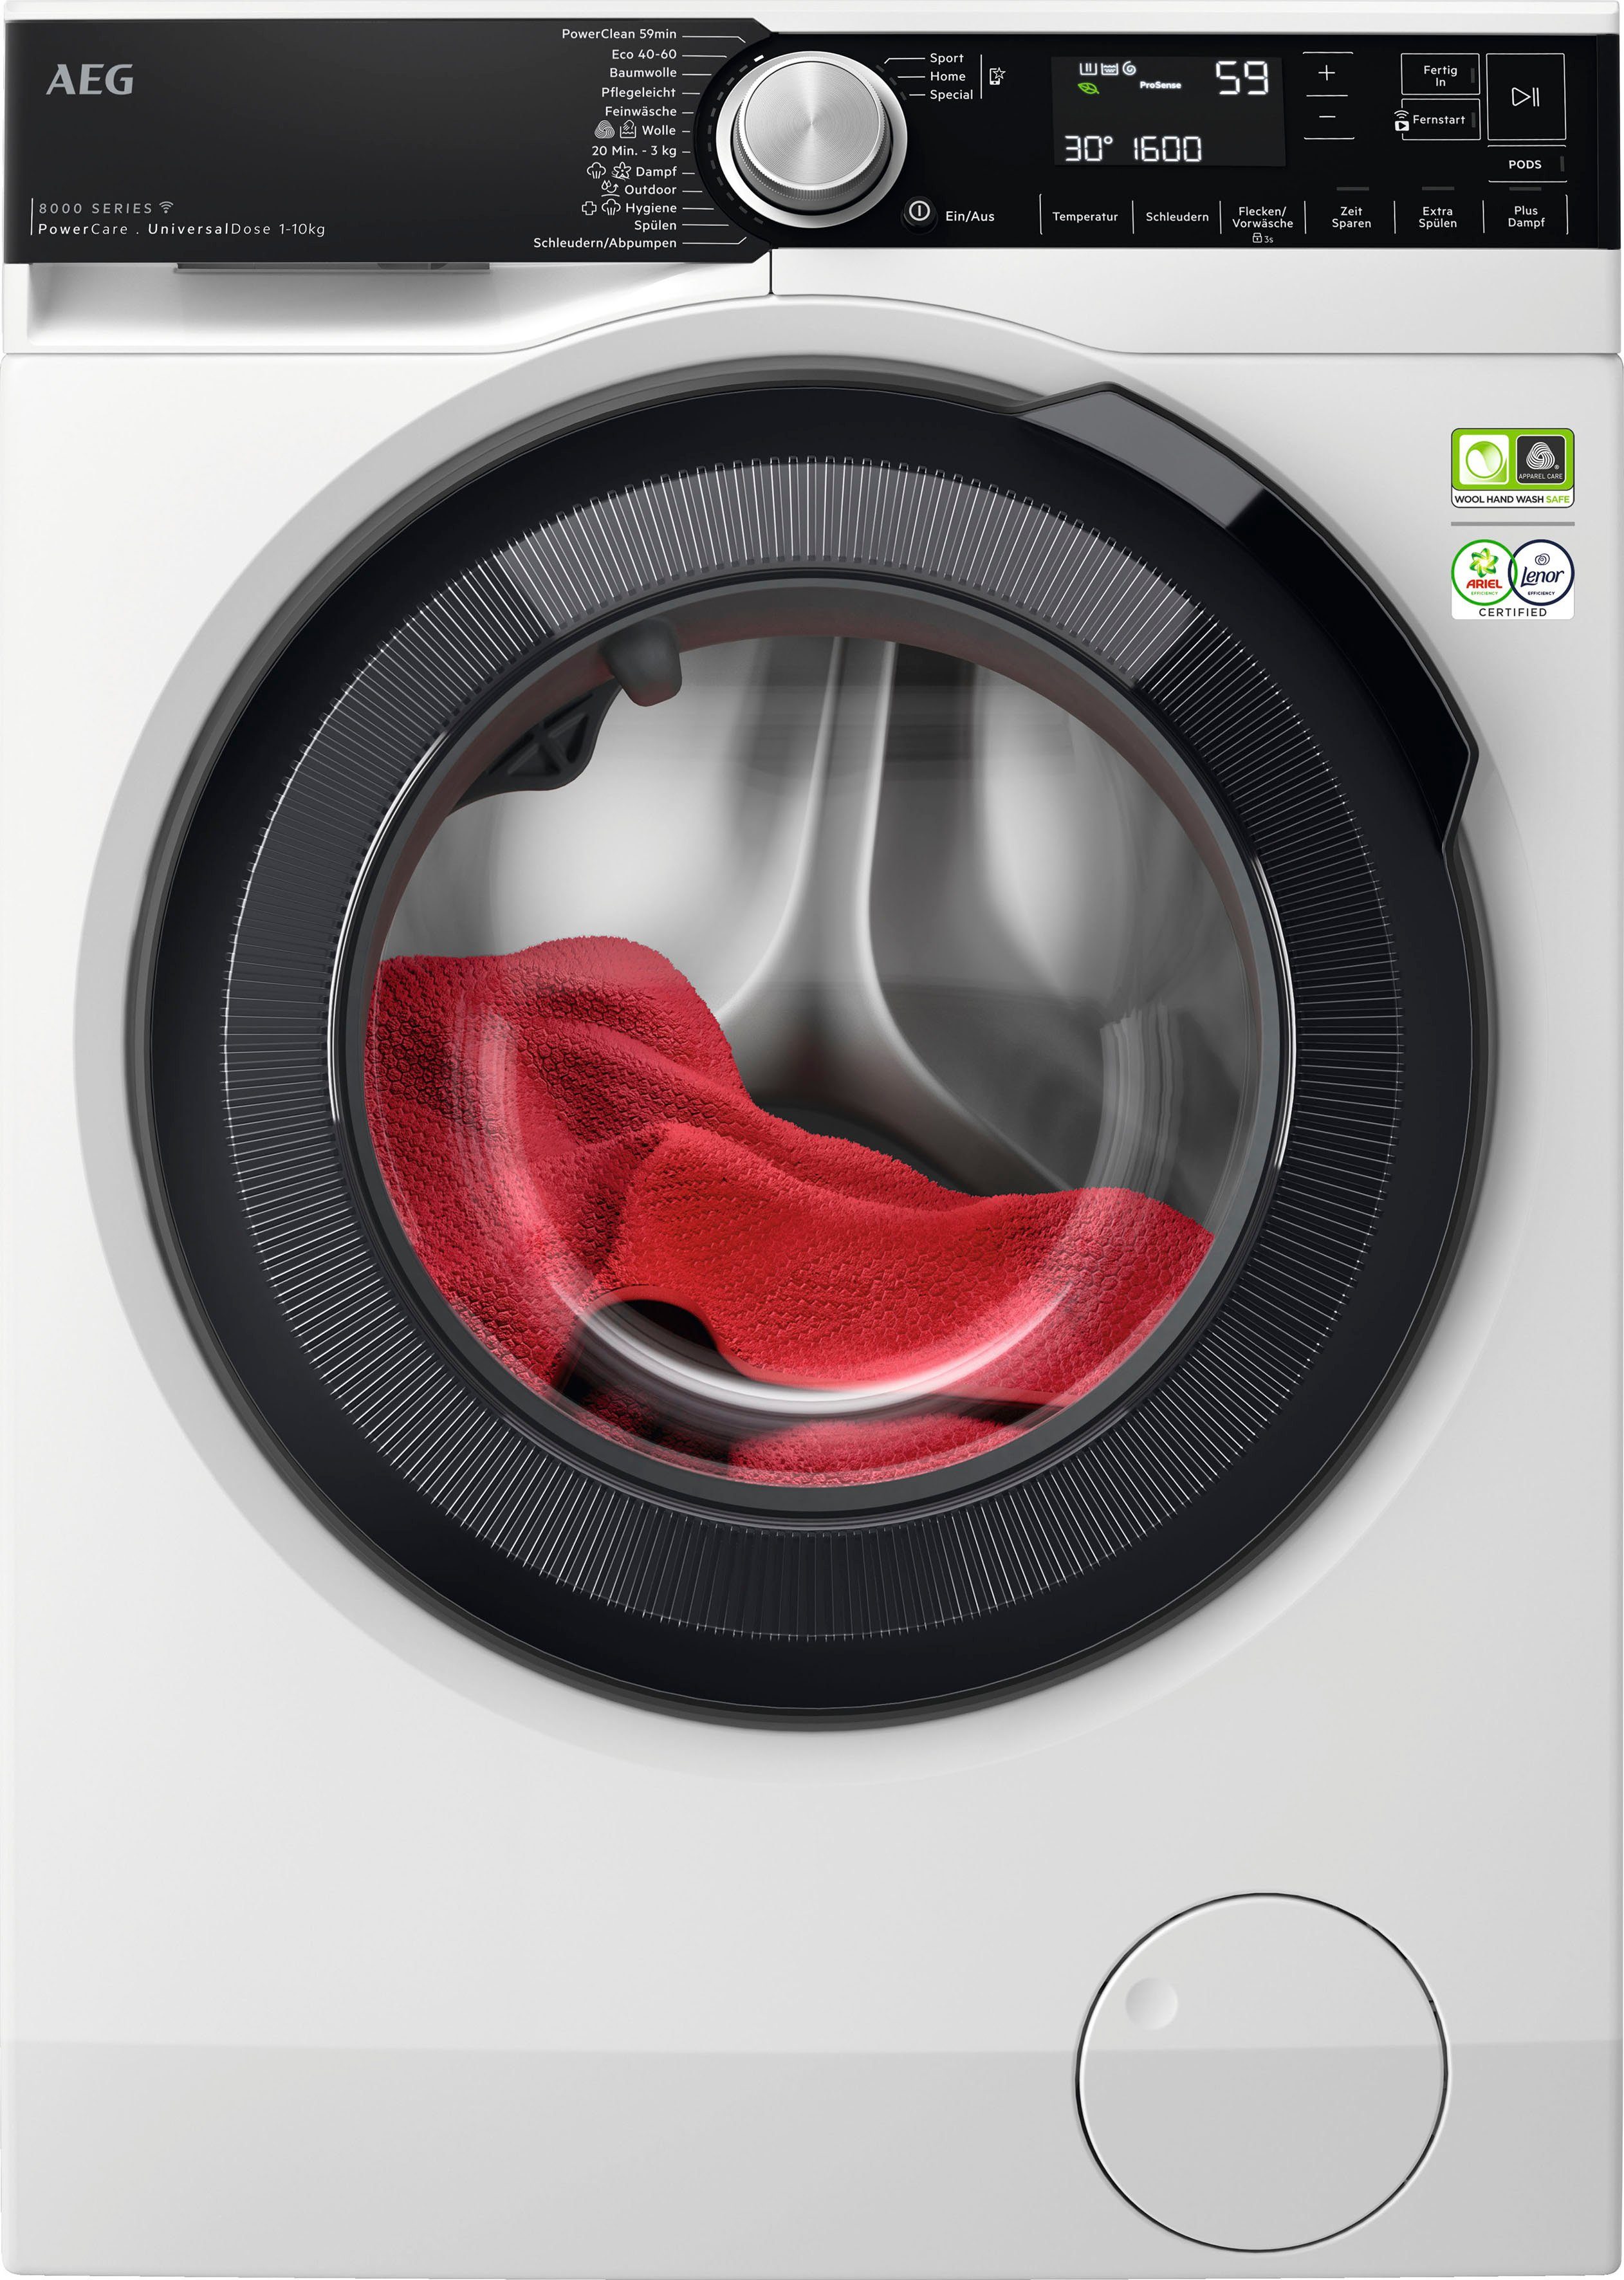 Waschmaschine 30 10 °C U/min, Min. & Fleckenentfernung 1600 PowerClean AEG 8000 914501331, nur - in LR8E80600 59 kg, bei Wifi